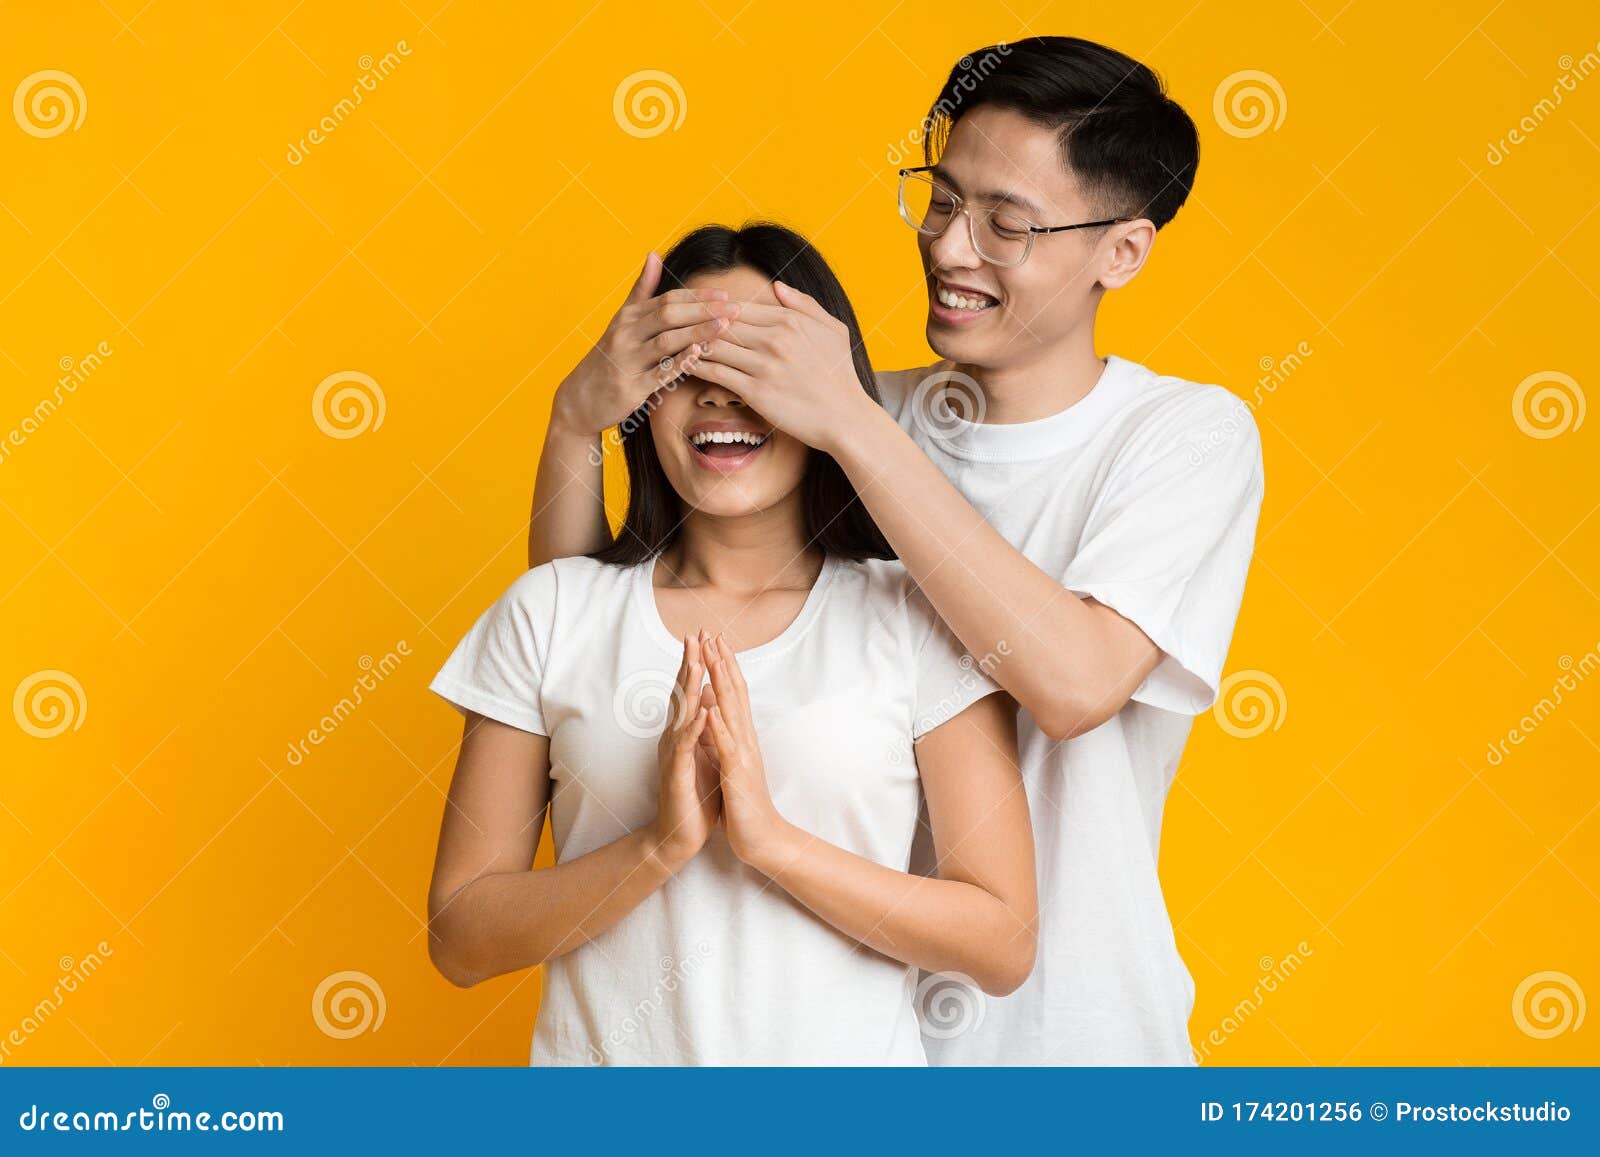 asian-man-standing-behind-his-girlfriend-closing-her-eyes-happy-couple-playing-hide-seek-wife-yellow-background-174201256.jpg